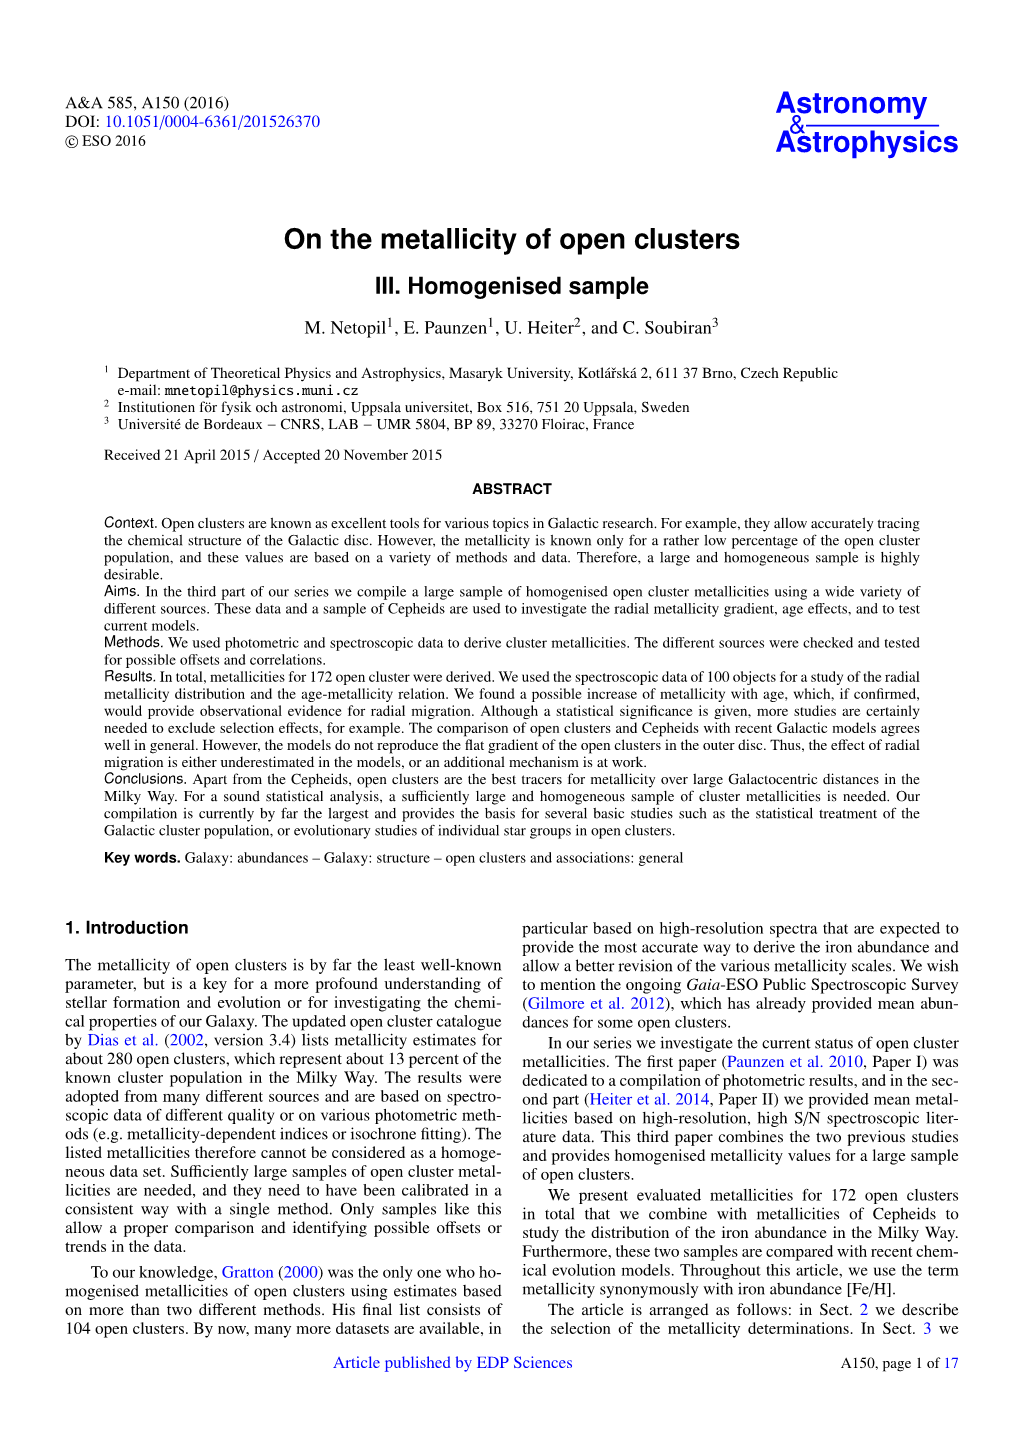 On the Metallicity of Open Clusters III